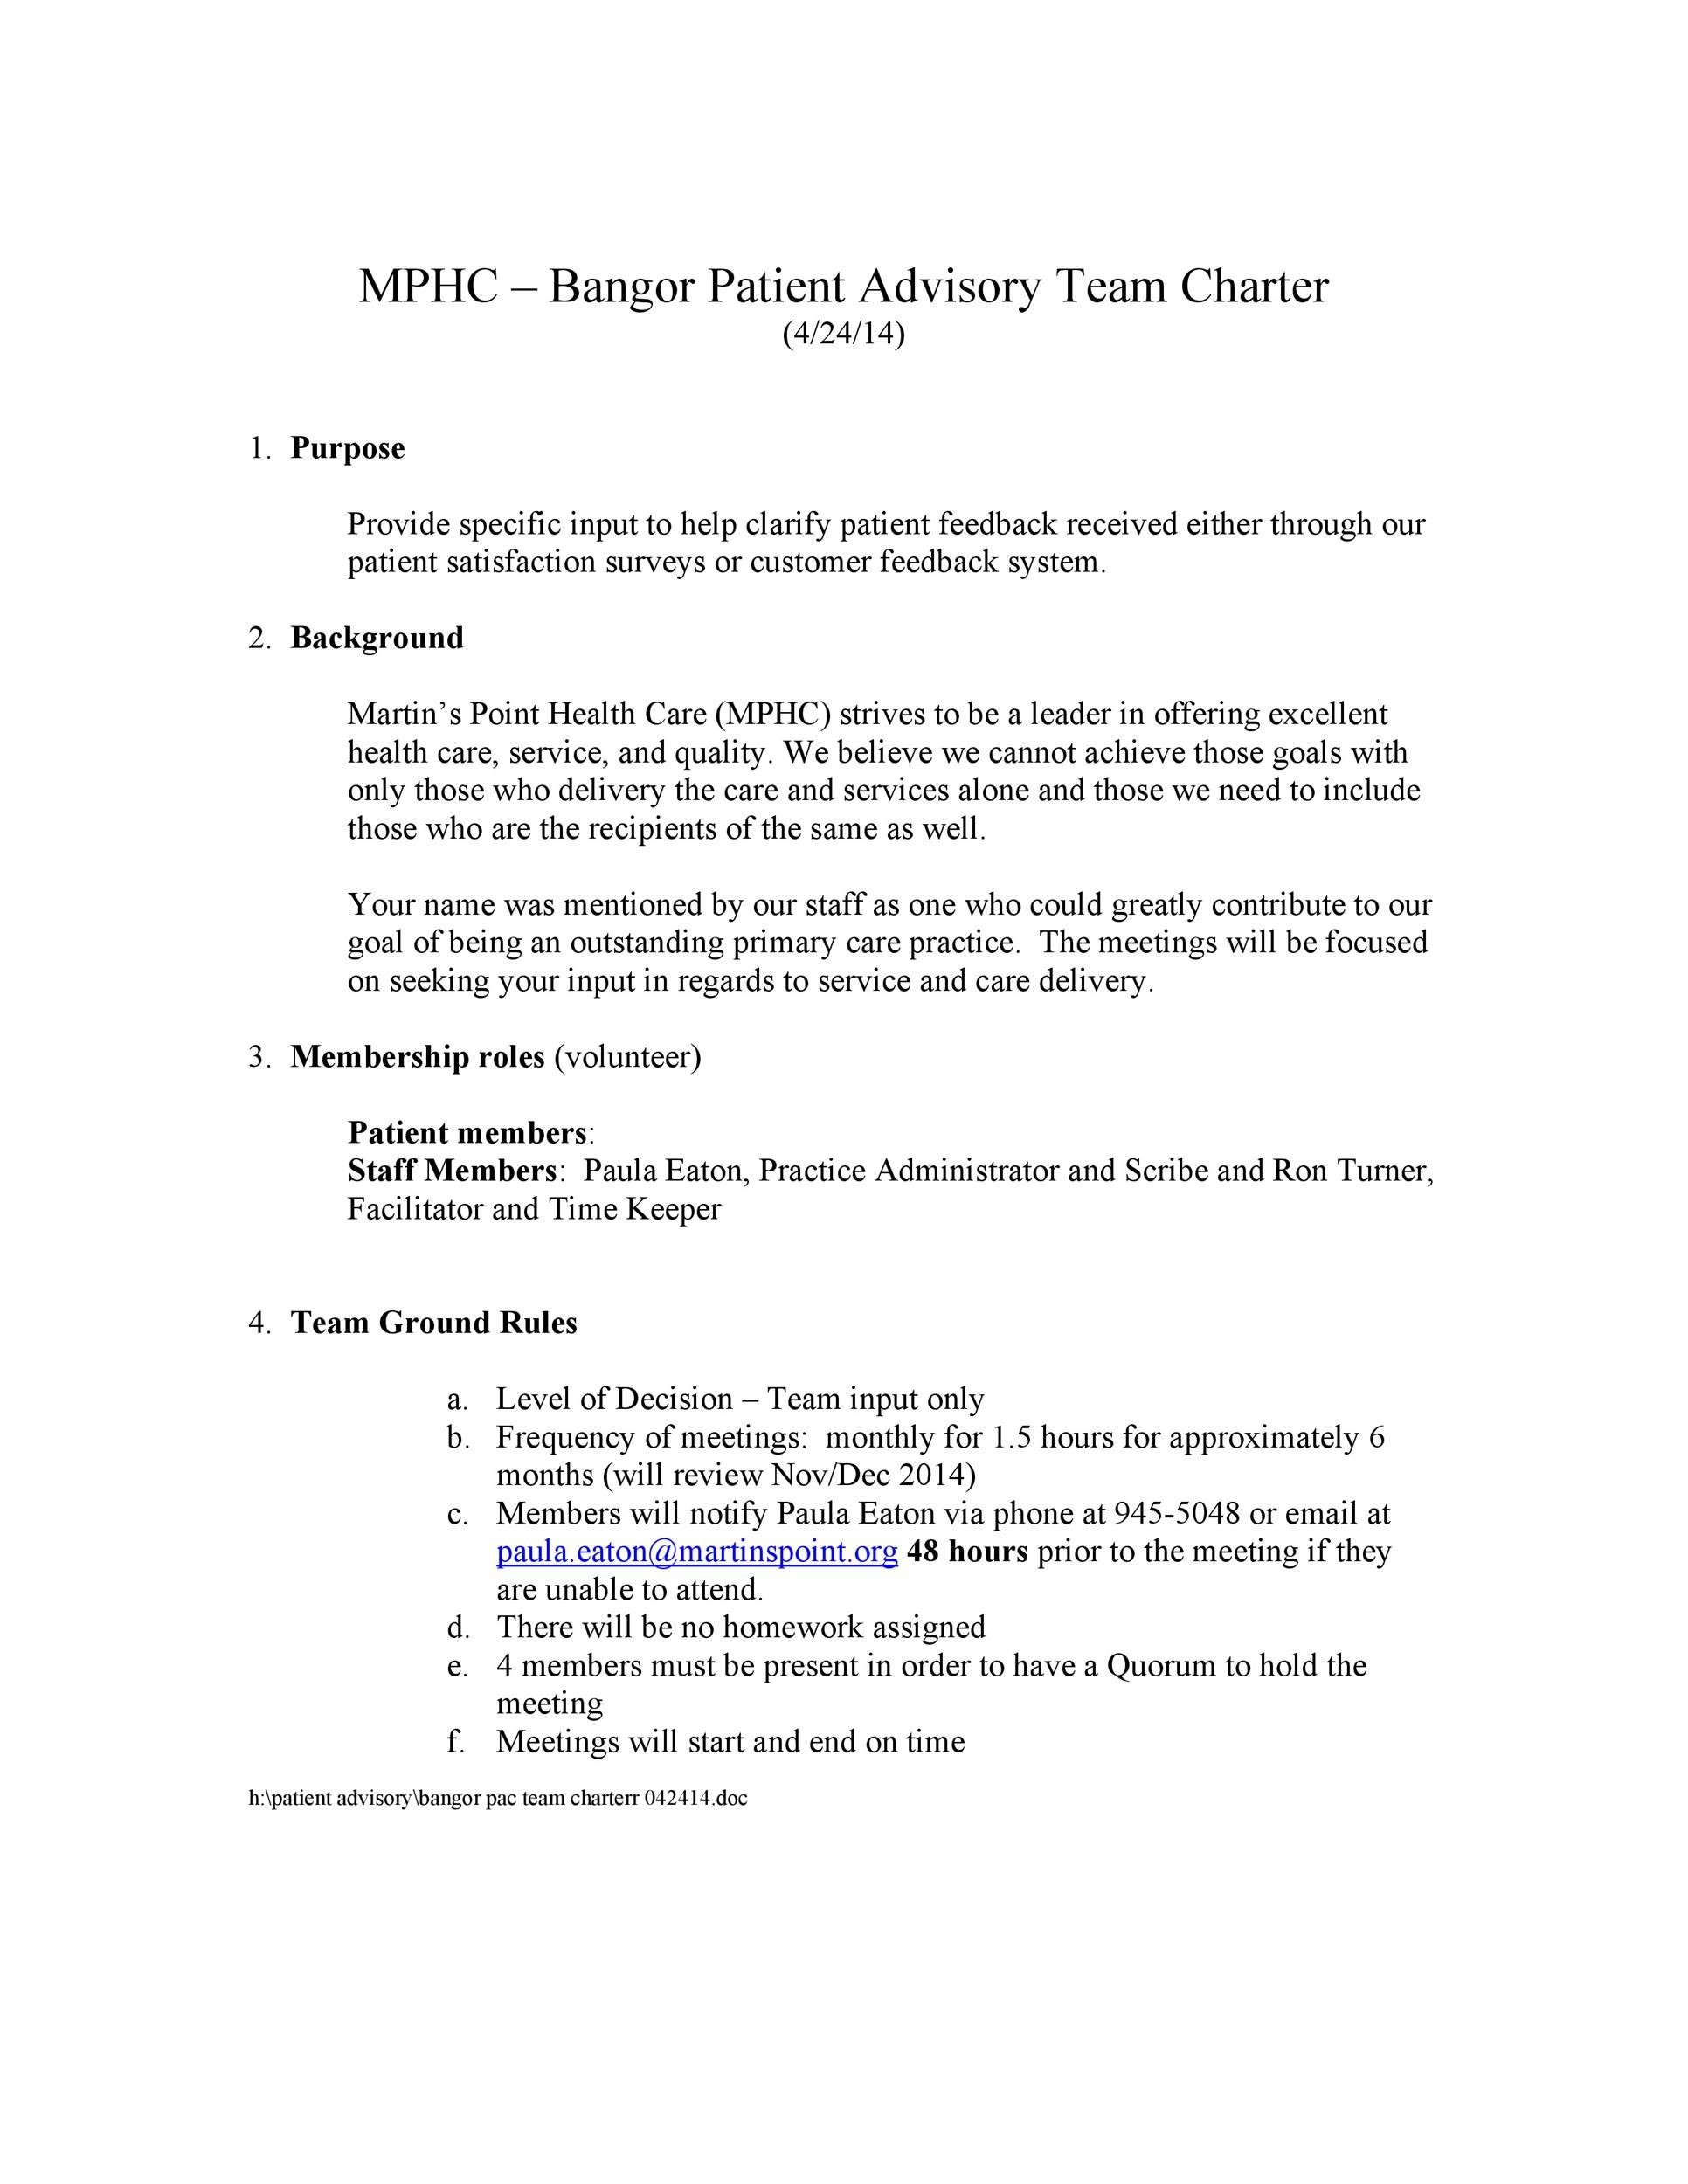 Free team charter template 20